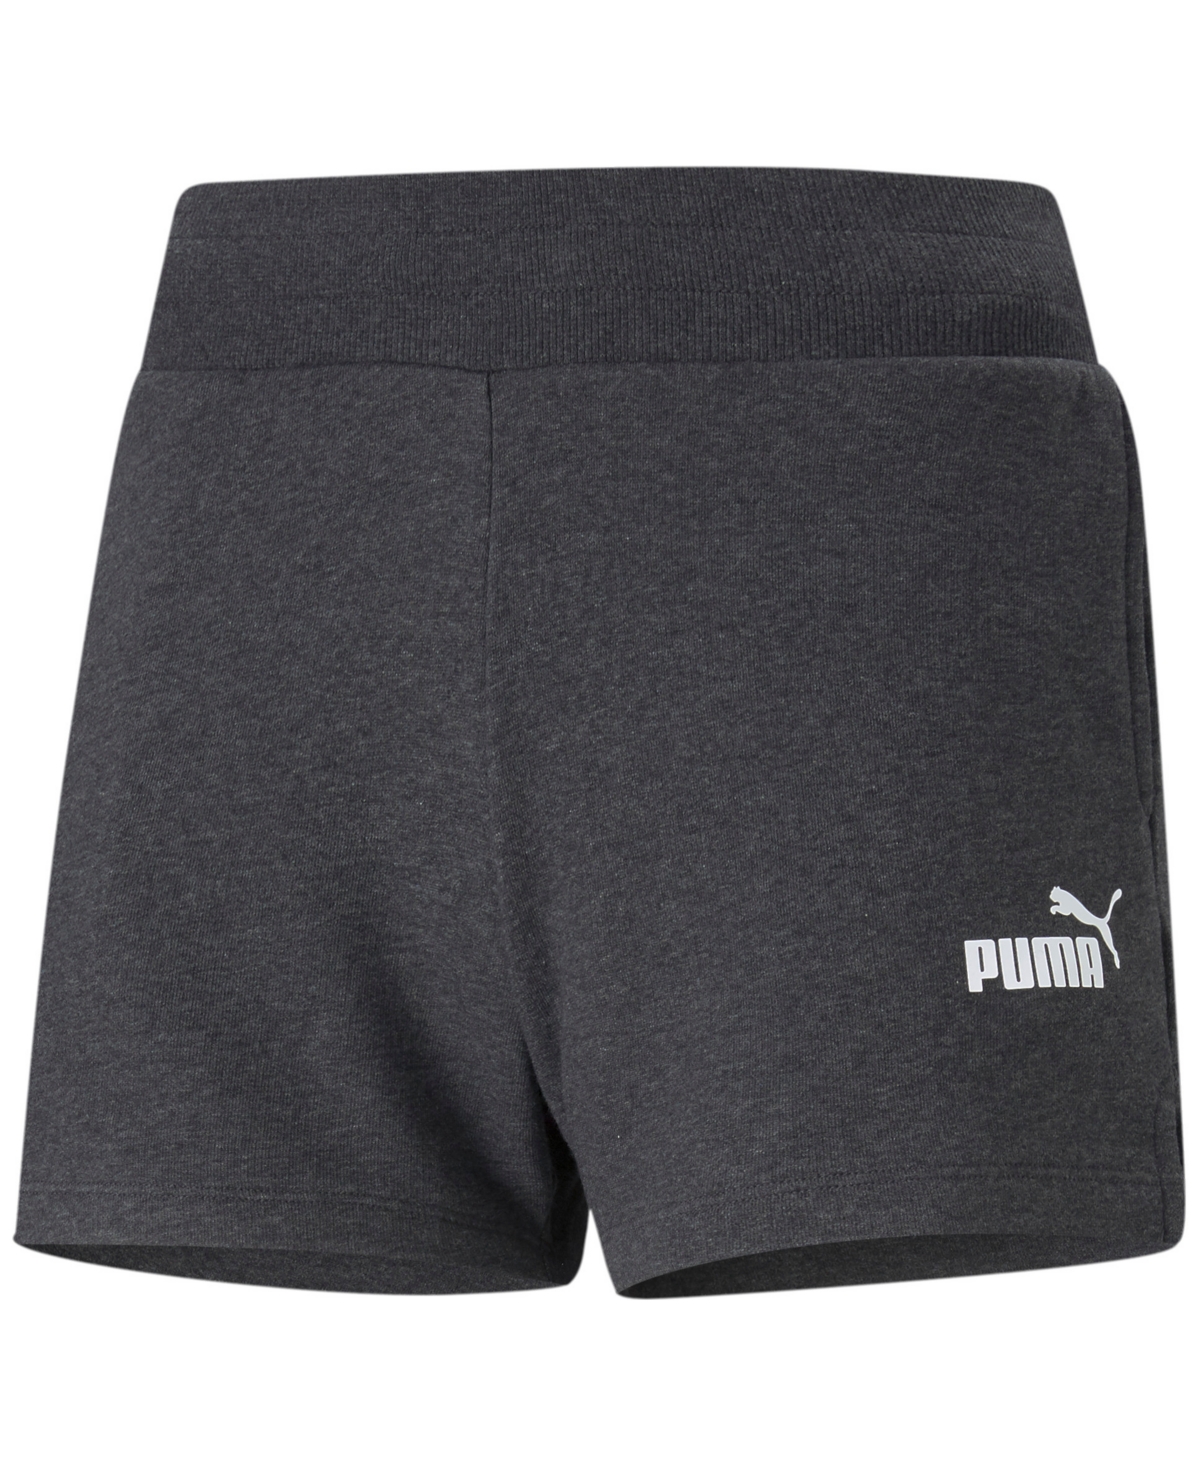 Puma Plus Size Fleece Shorts